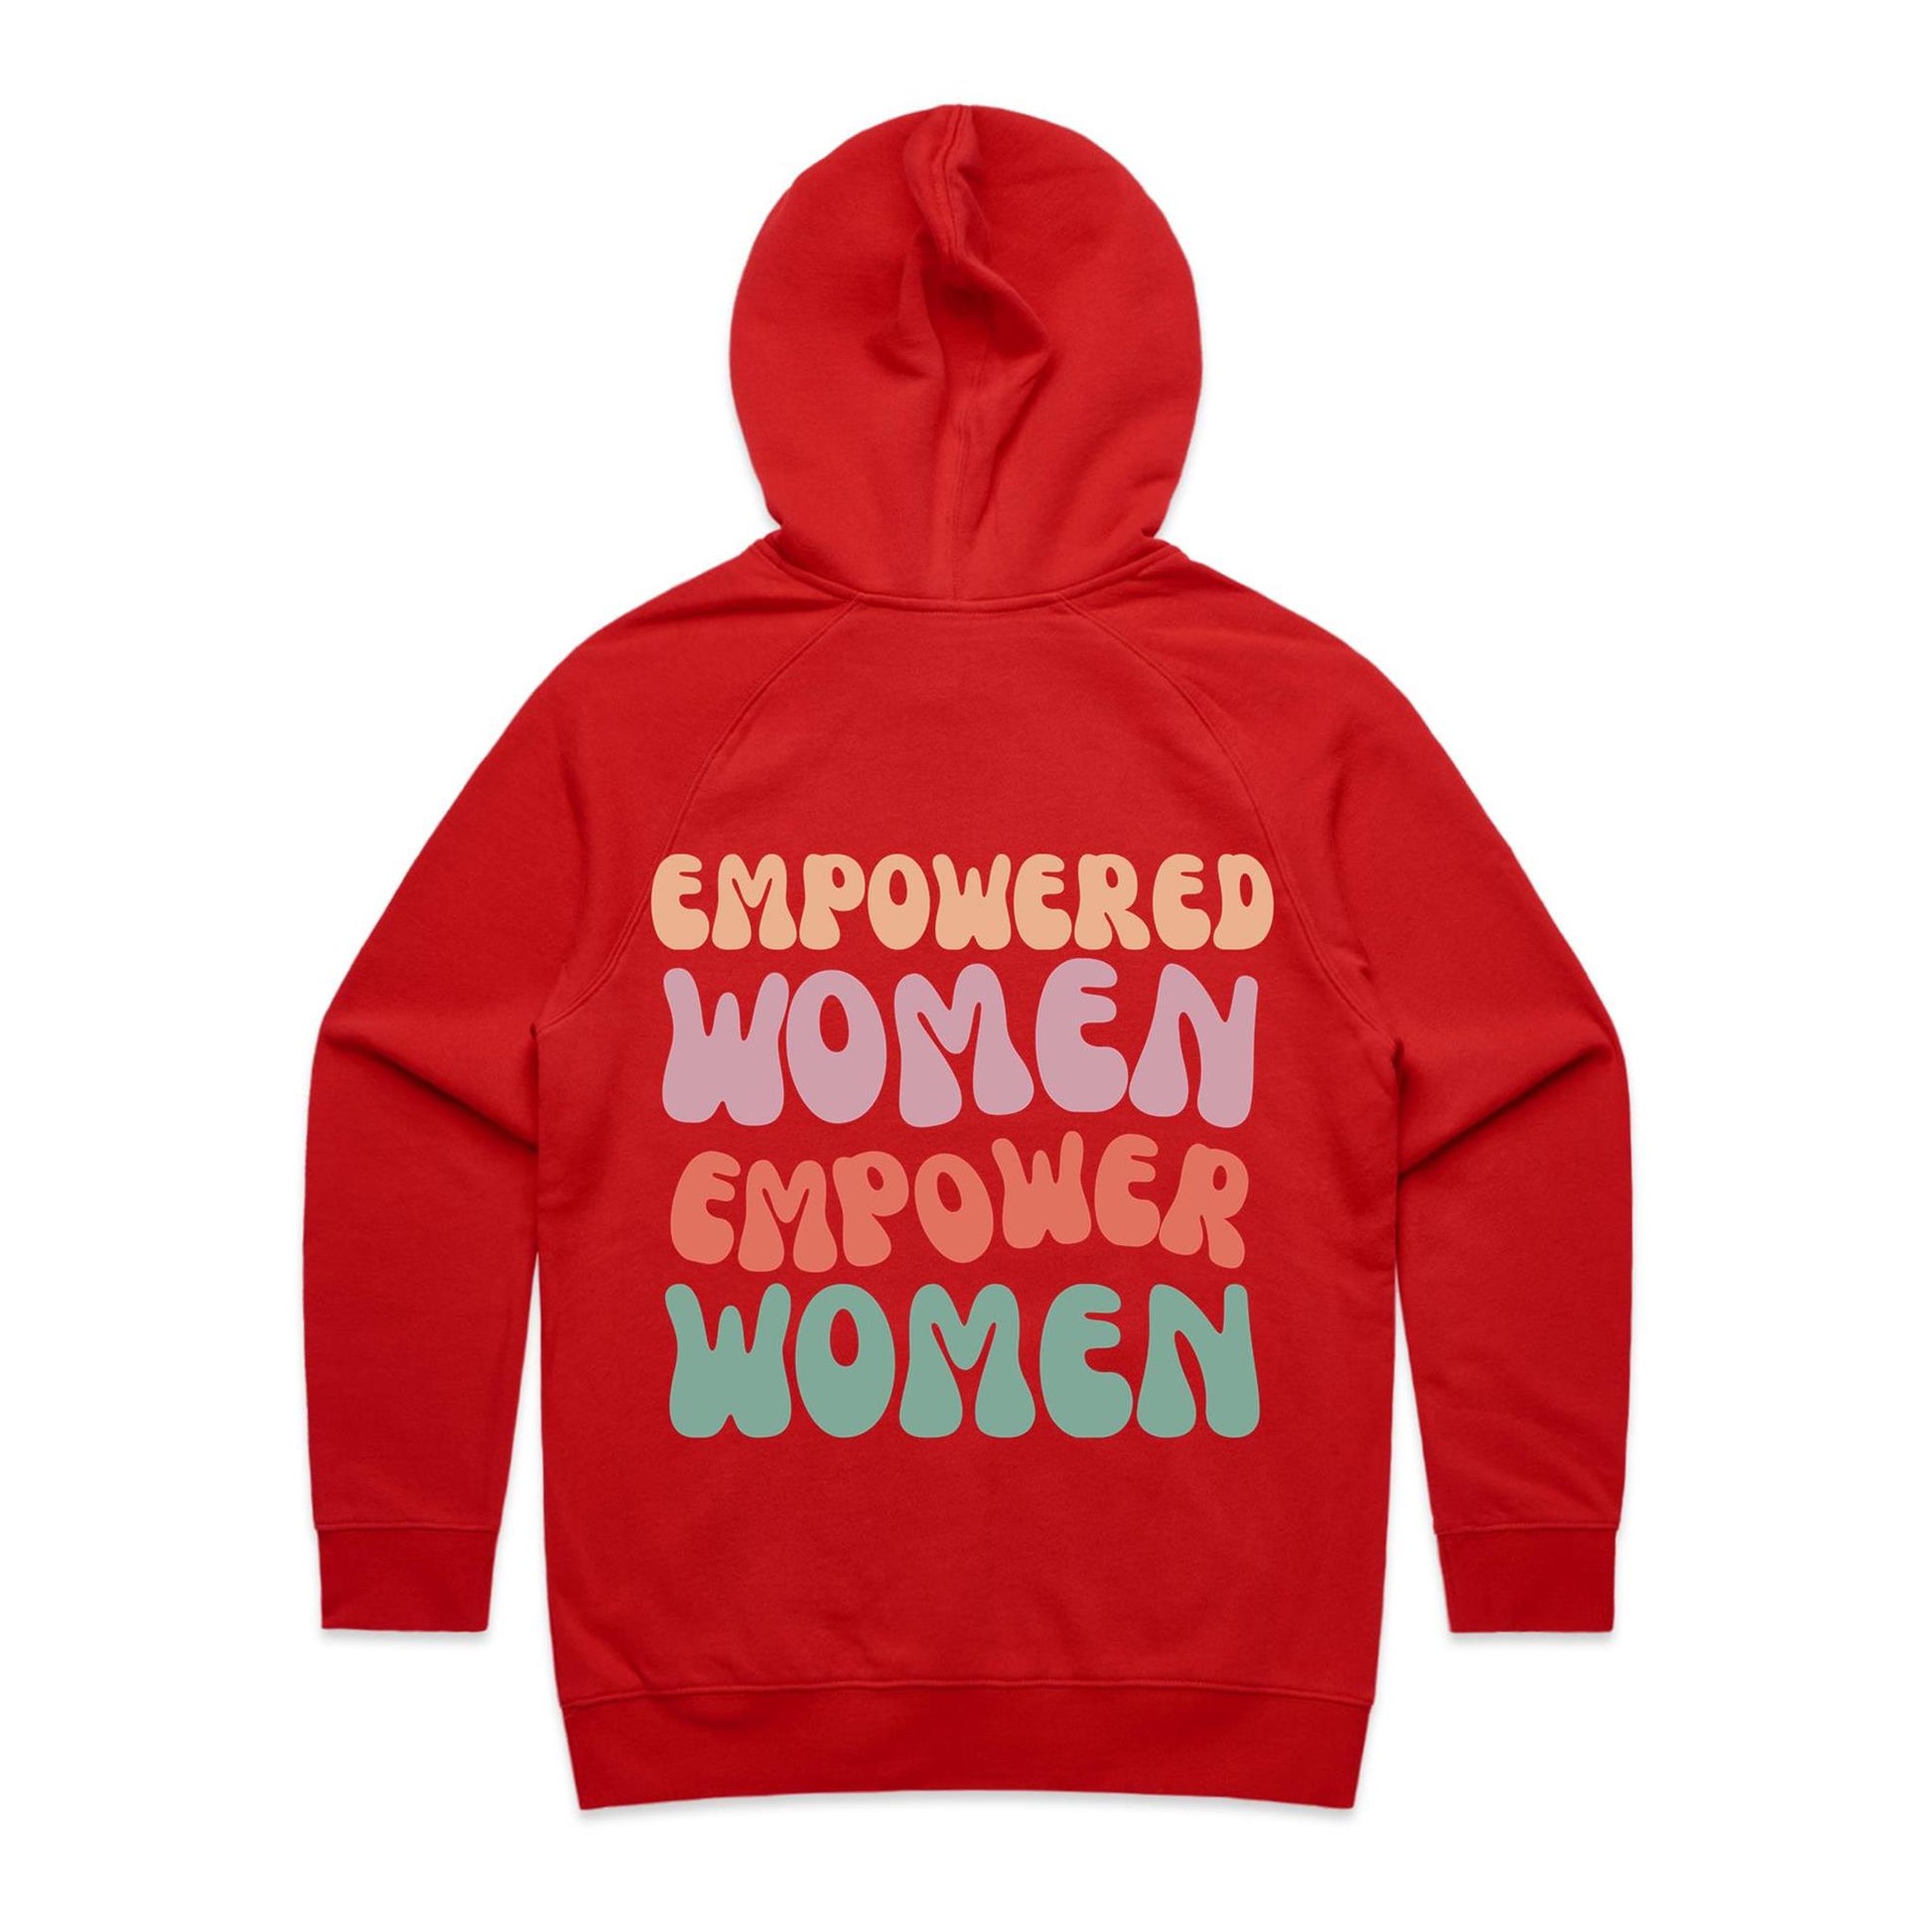 Empowered Women Empower Women, Back Print Only - Women's Supply Hood Red Womens Supply Hoodie